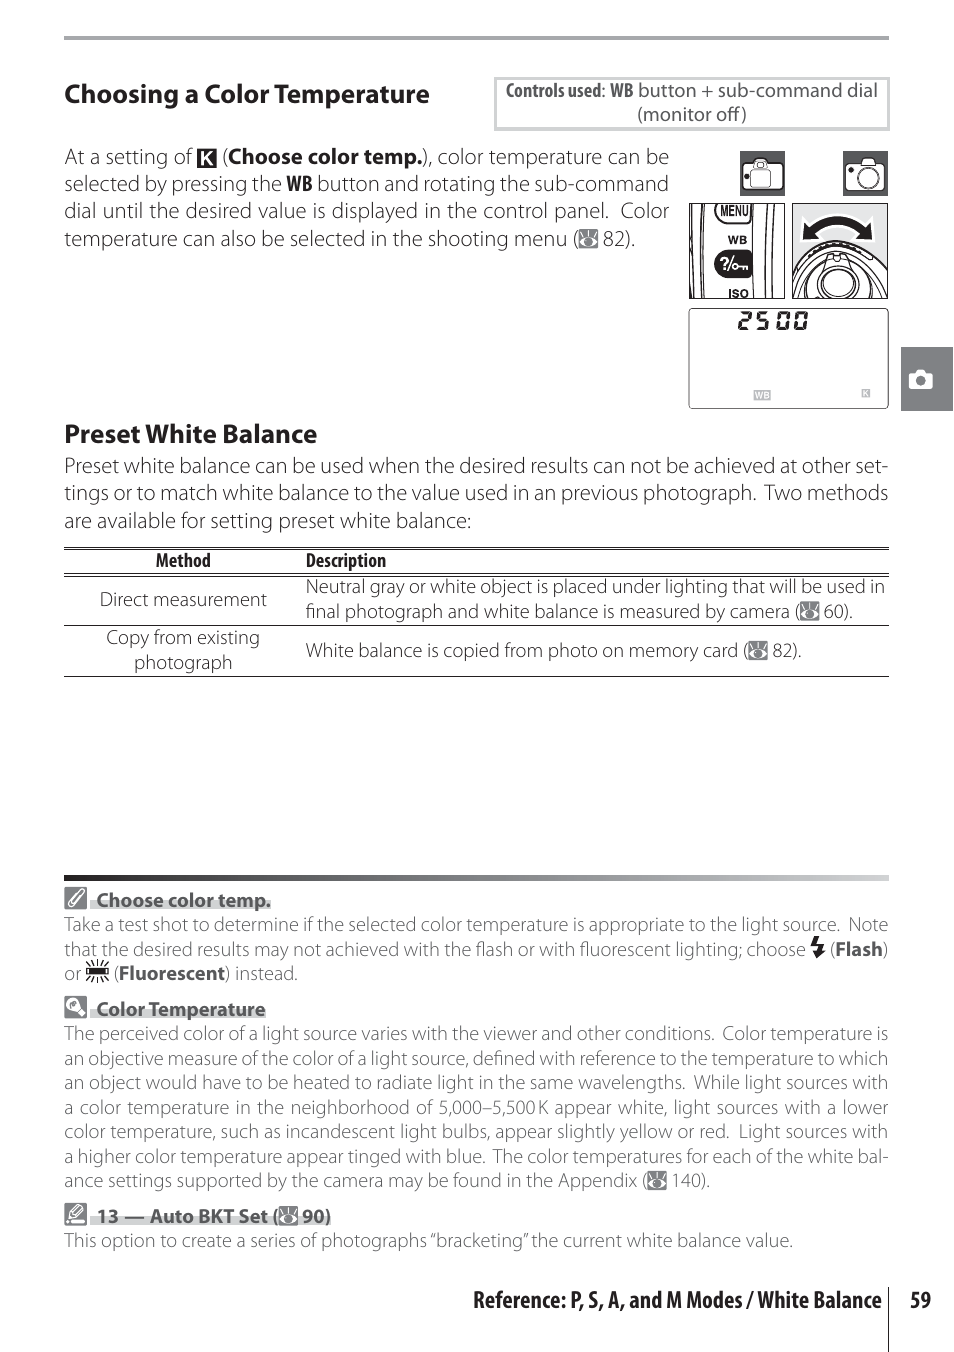 Choosing a color temperature, Preset white balance | Nikon D80 User Manual | Page 71 / 162